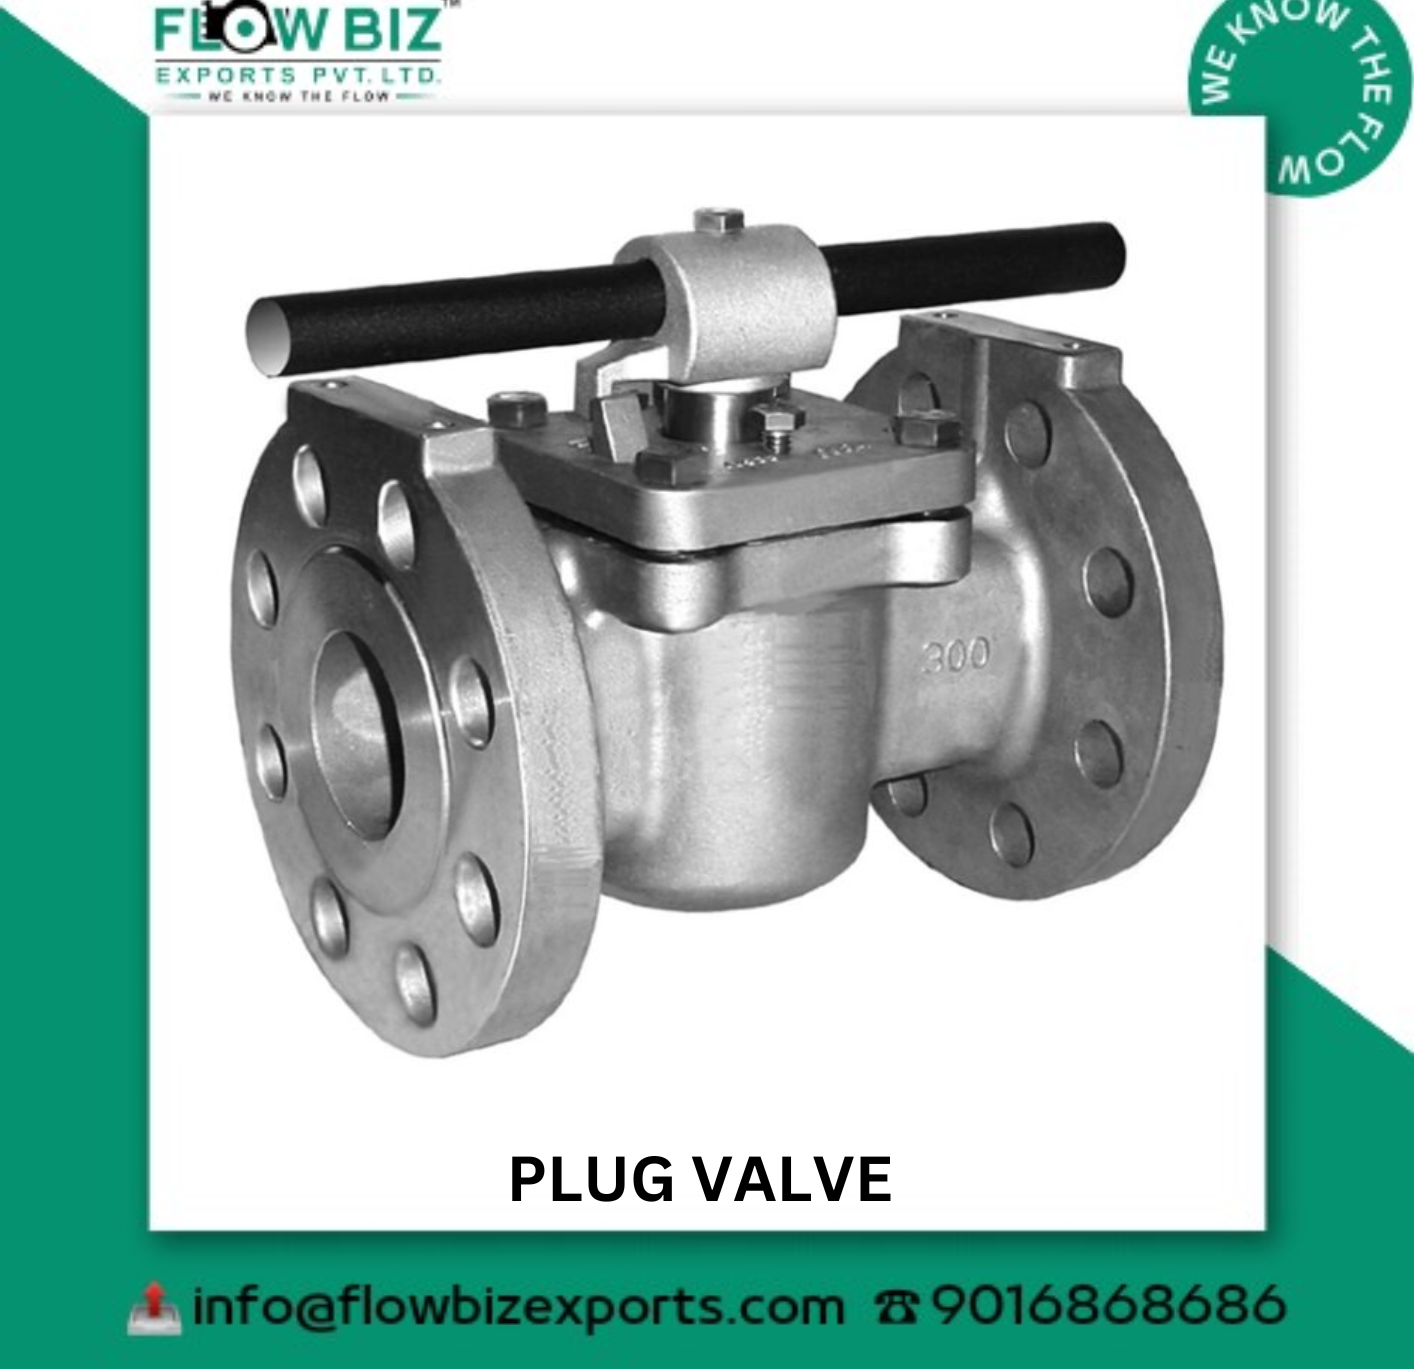 best plug valve manufacturer mumbai - Flowbiz